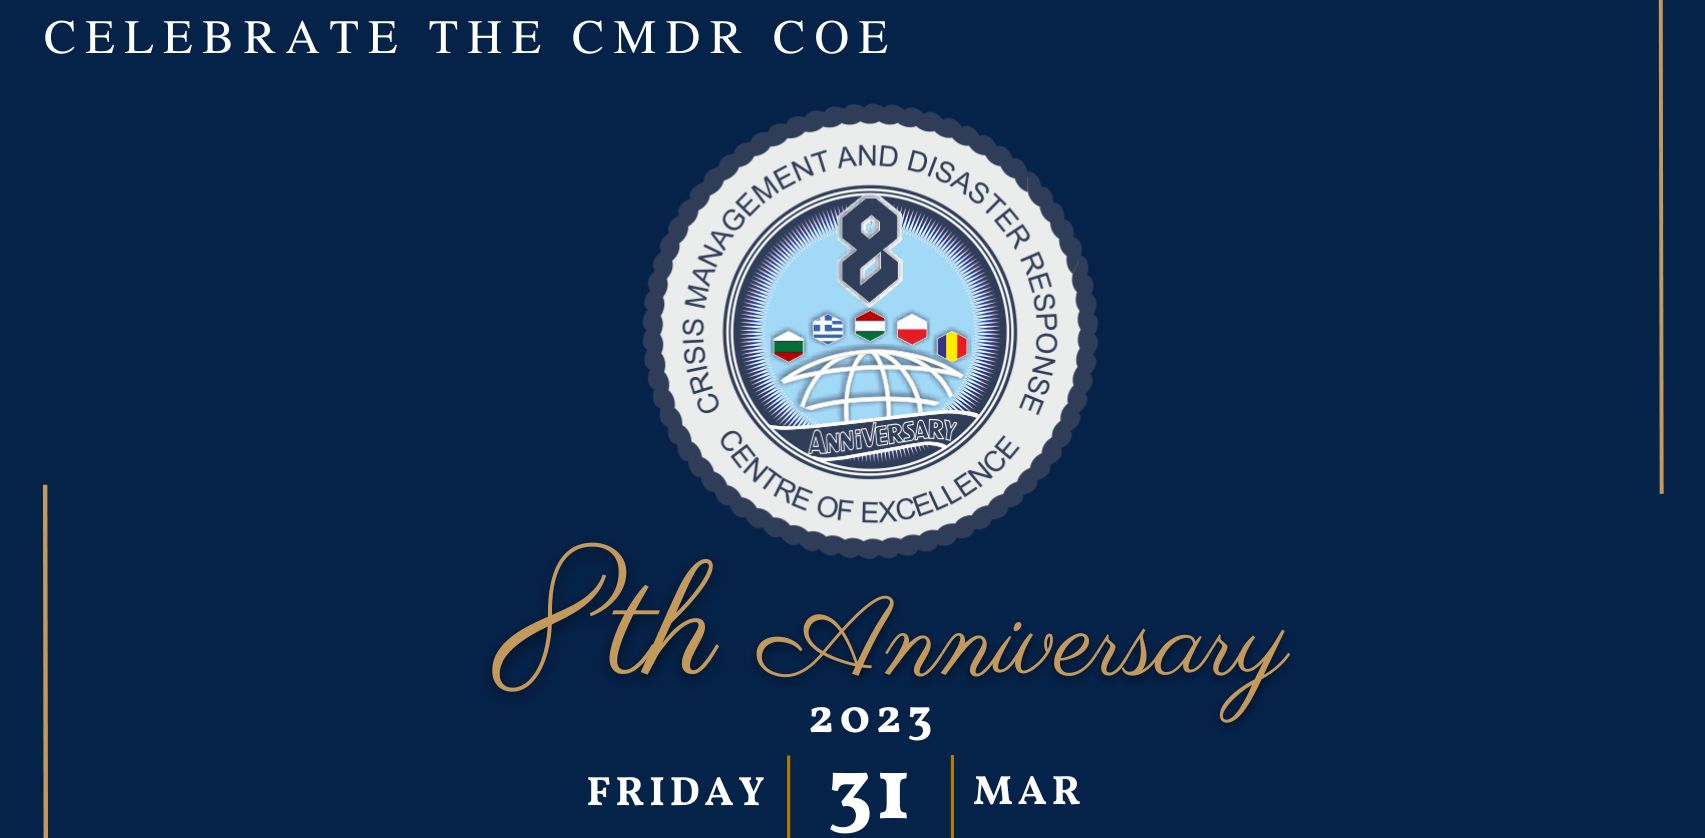 CMDR COE turns 8 